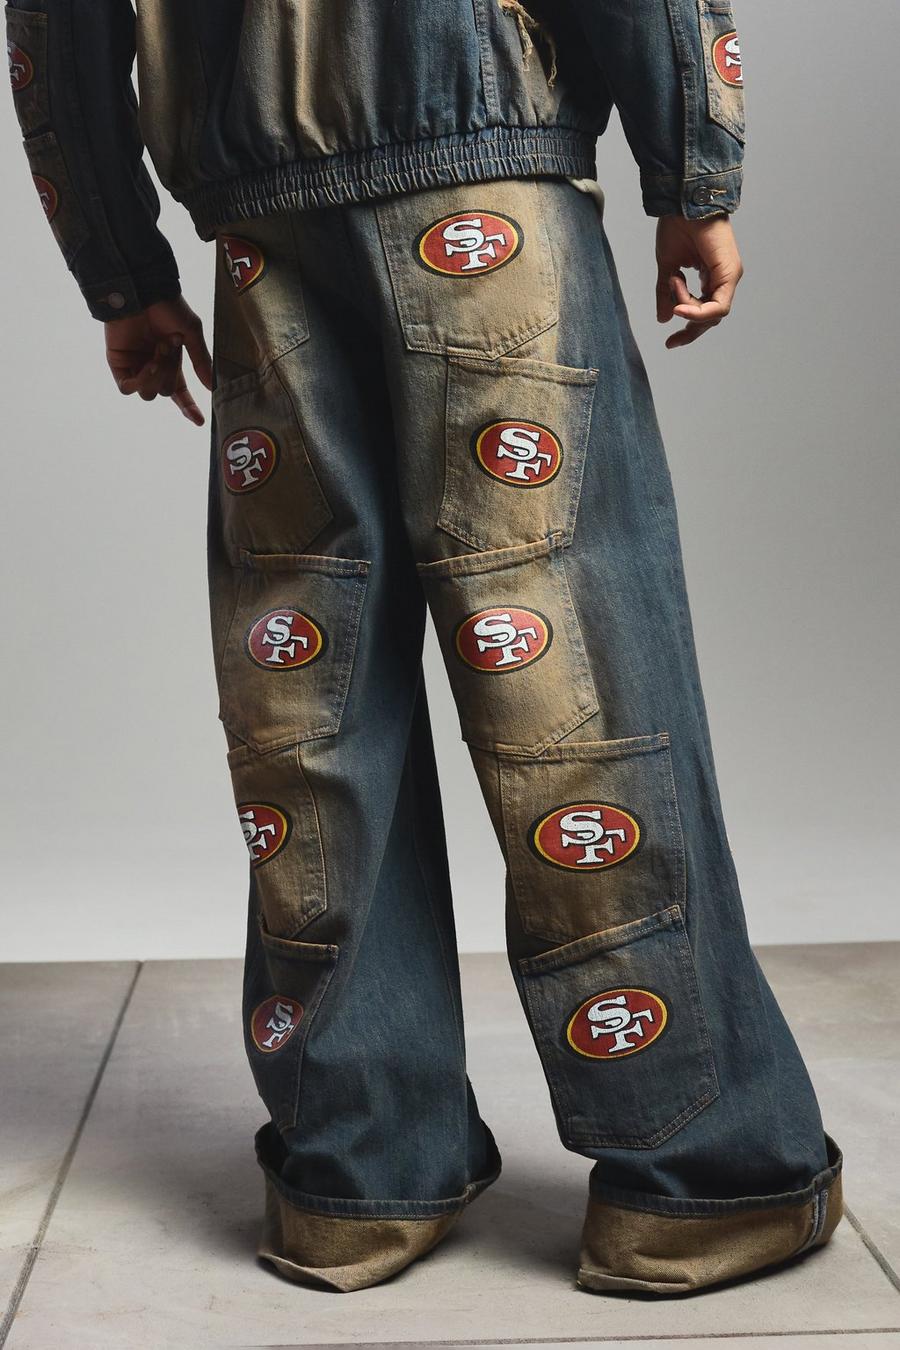 Jeans Nfl 49ers super extra larghi in denim rigido con tasche multiple, Antique wash